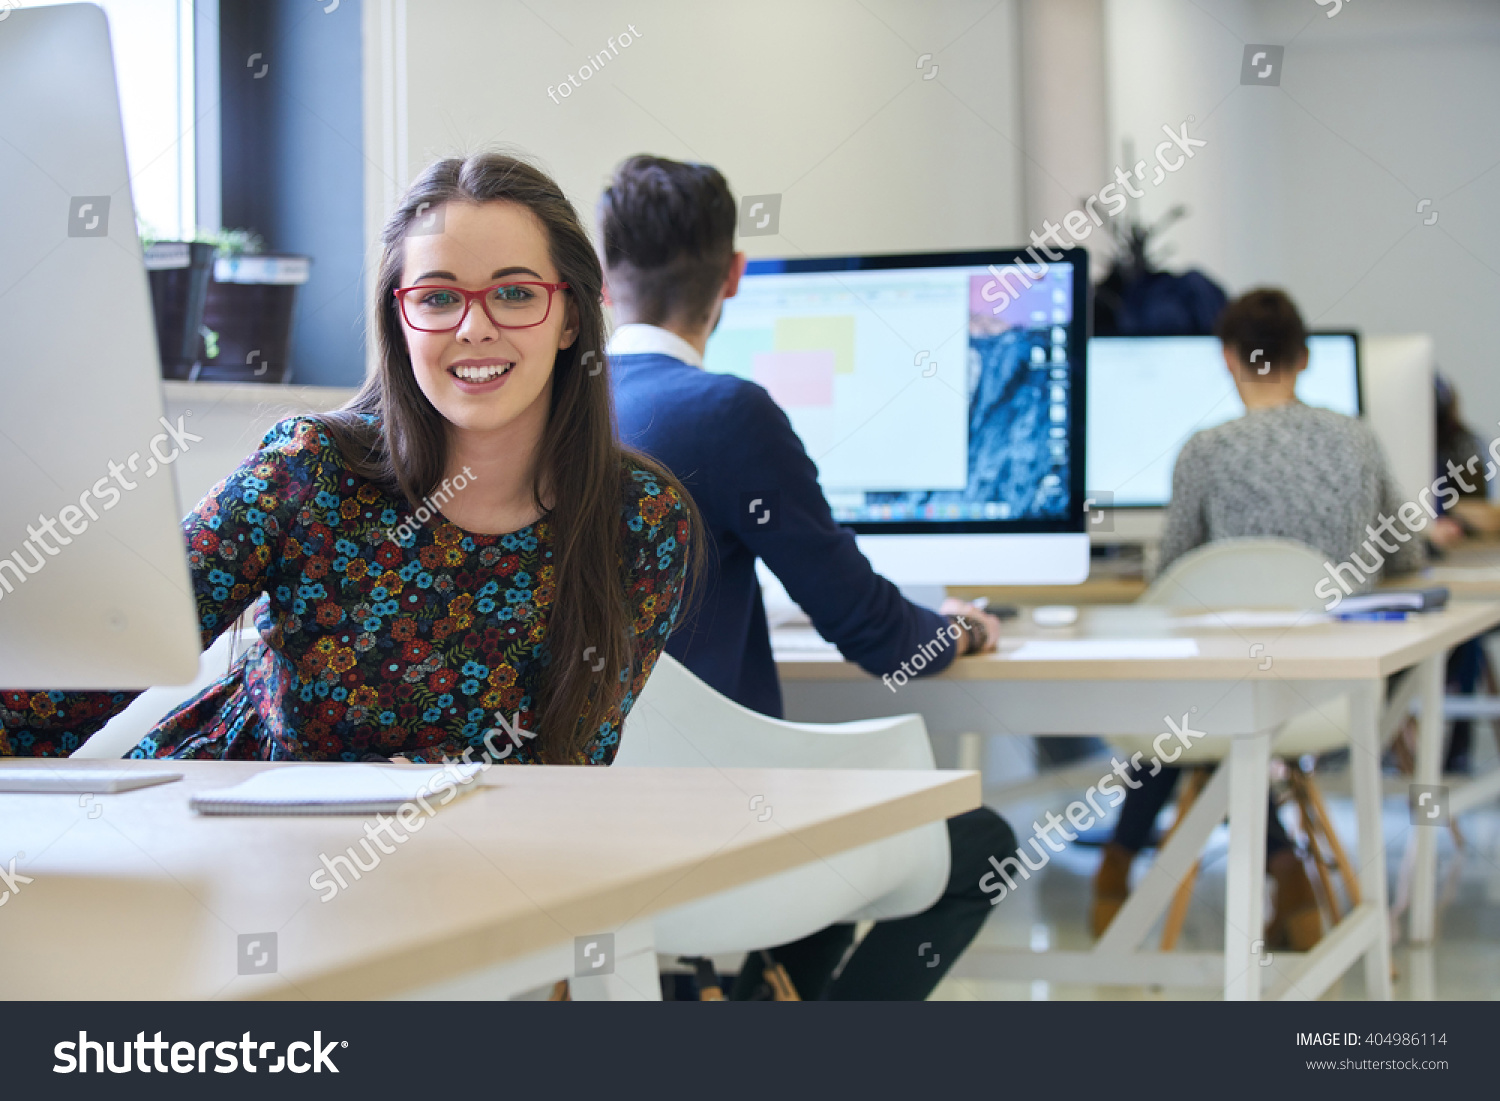 startup business, software developer working on computer at modern office #404986114